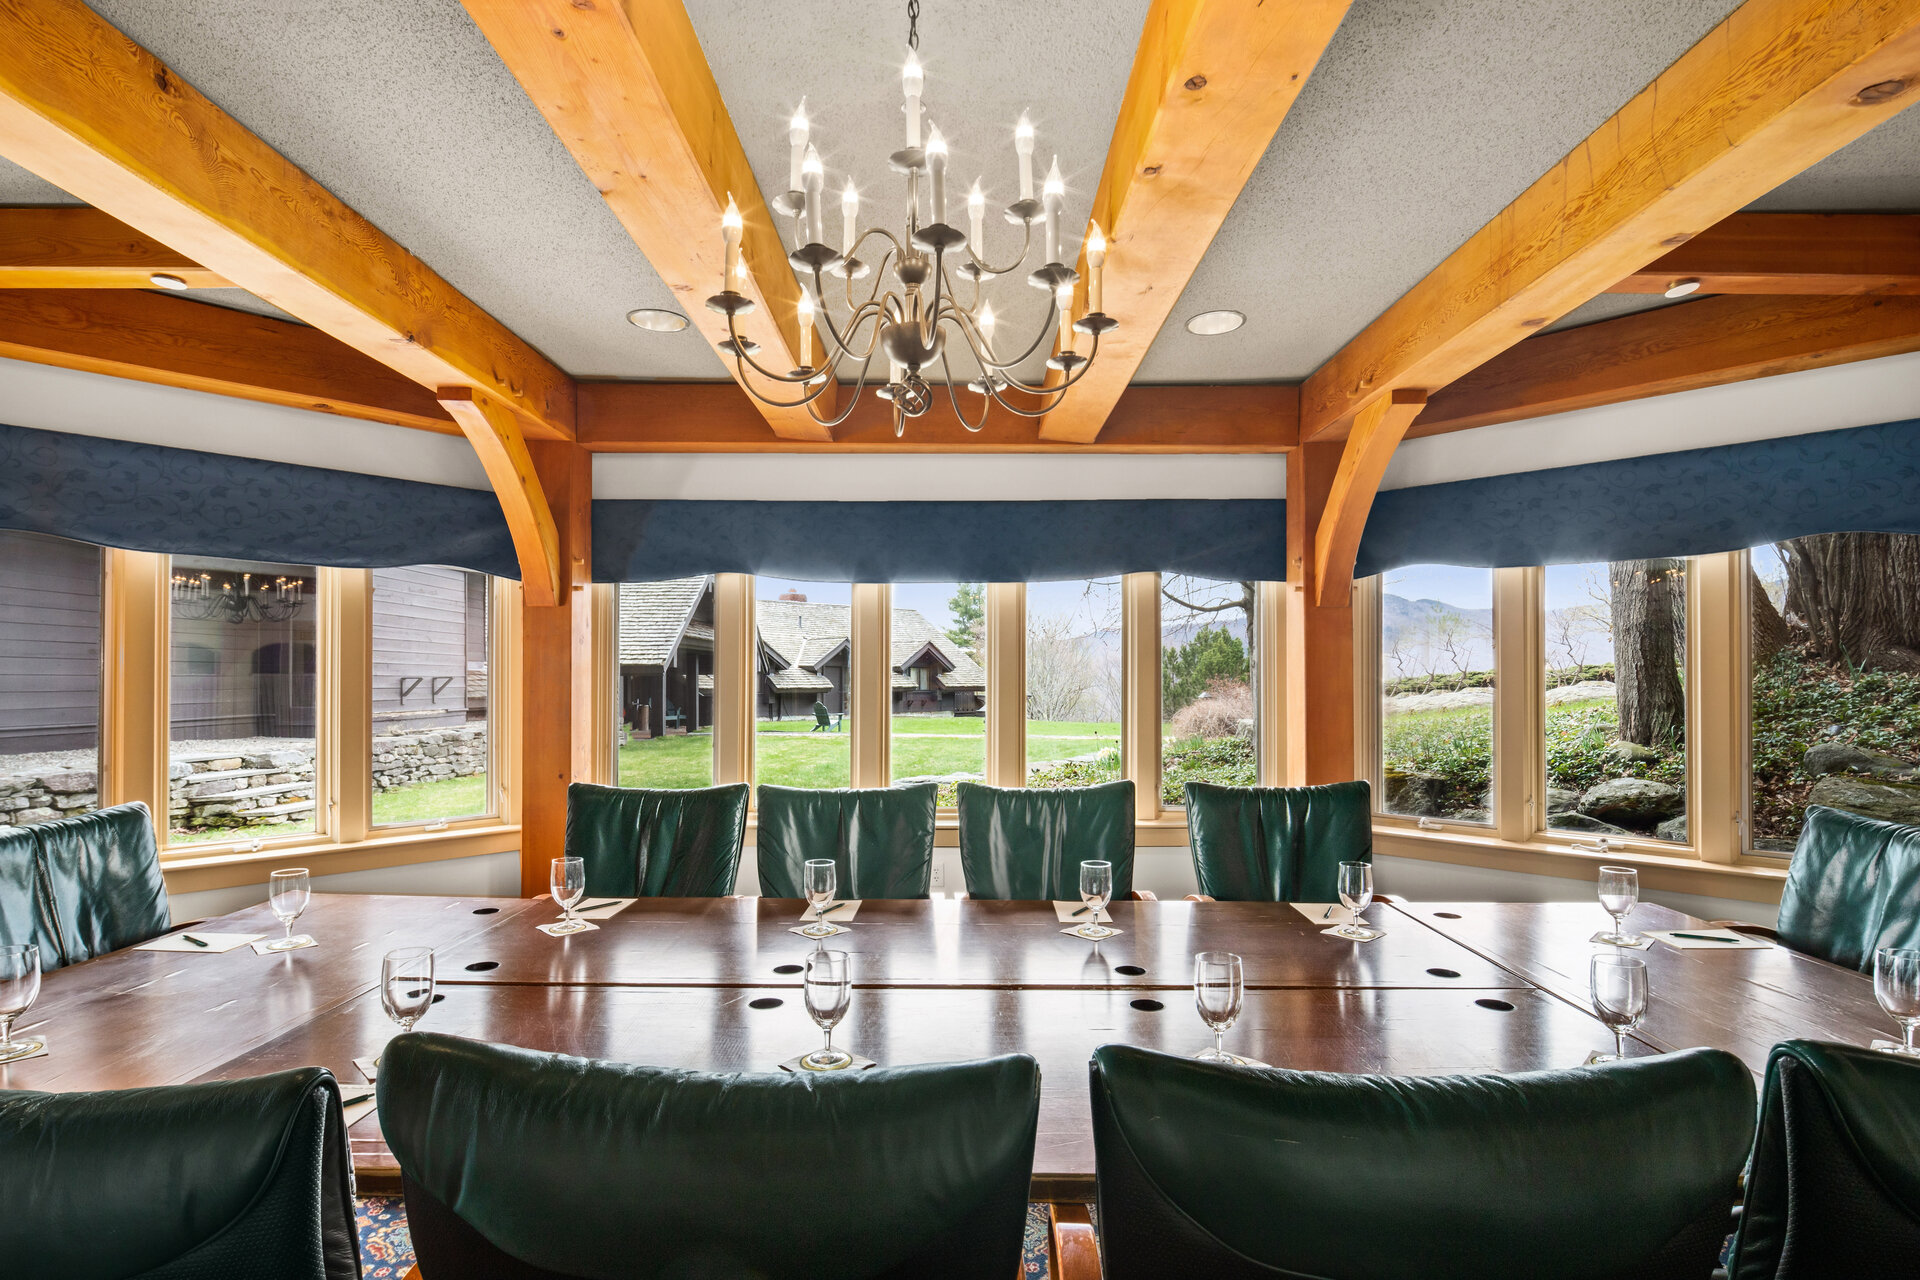 Boardroom for meetings at our Stowe resort